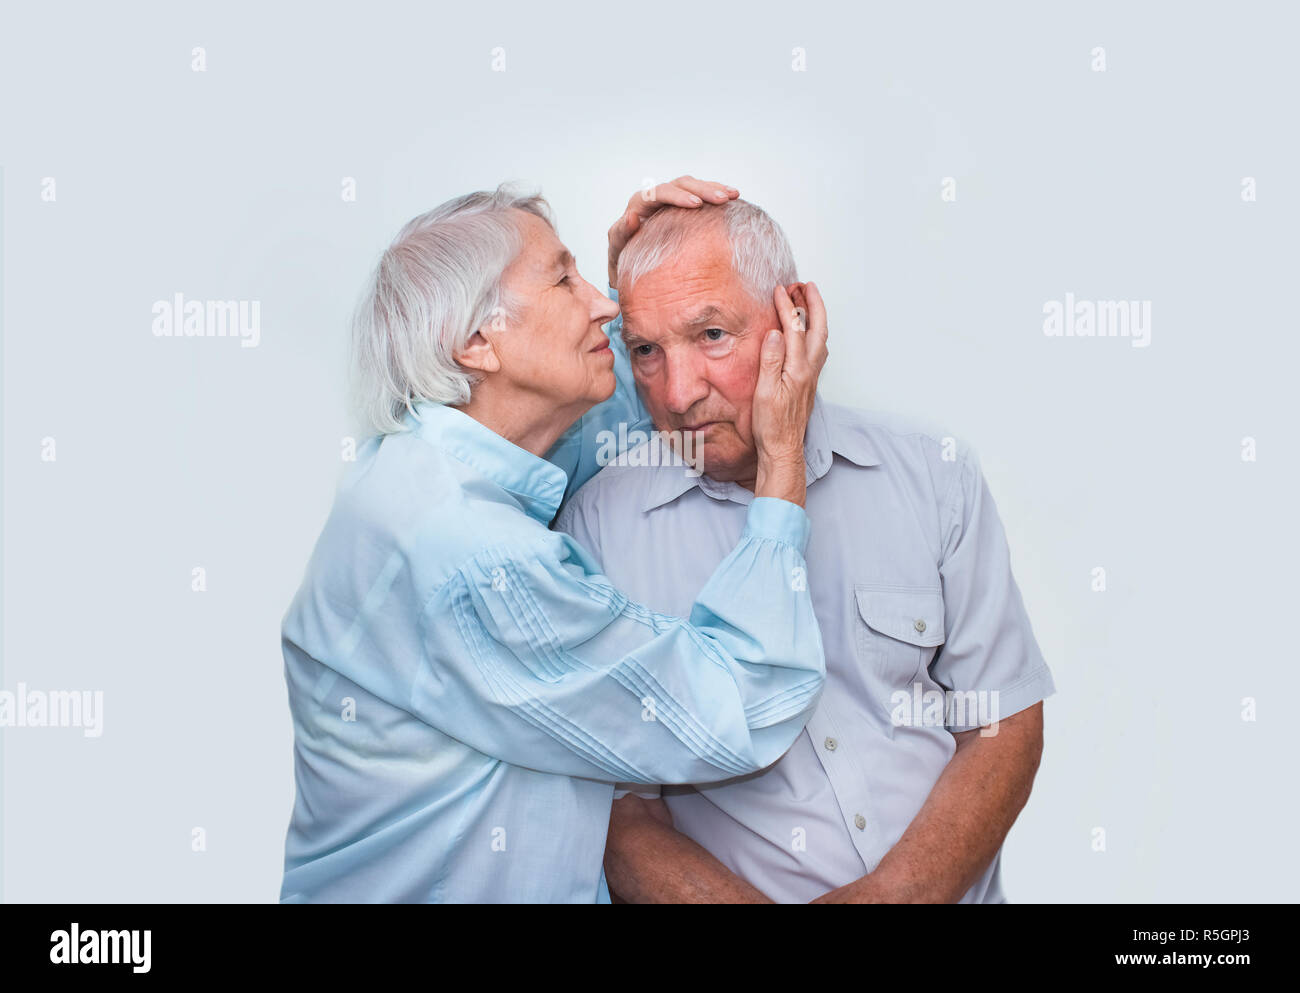 The elderly couple on studio background Stock Photo